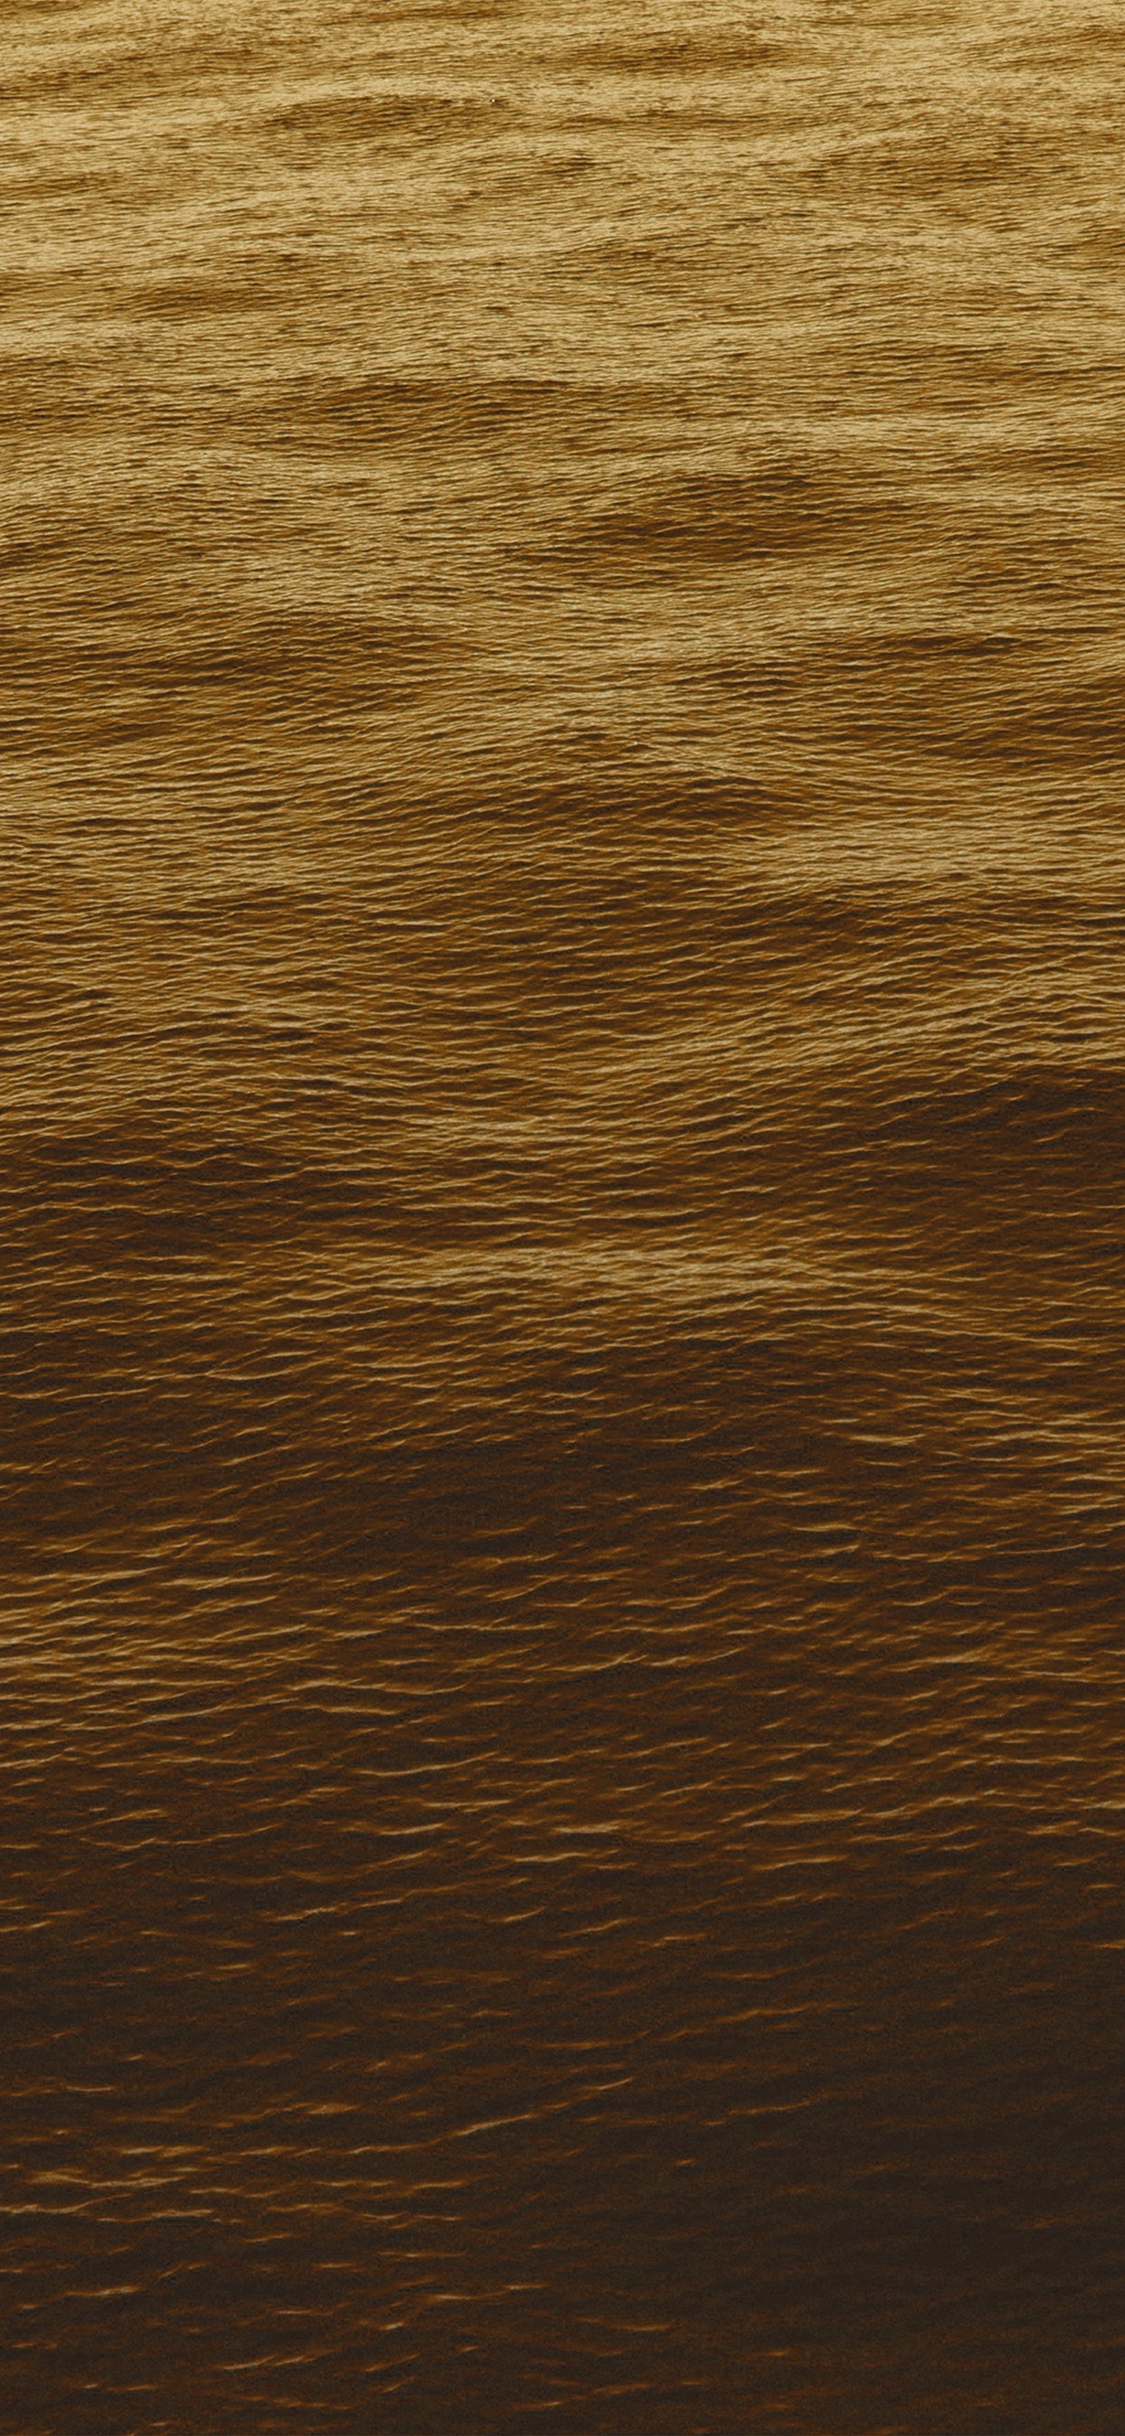 Wave Ocean Sea Gold Pattern iPhone X Wallpaper Free Download